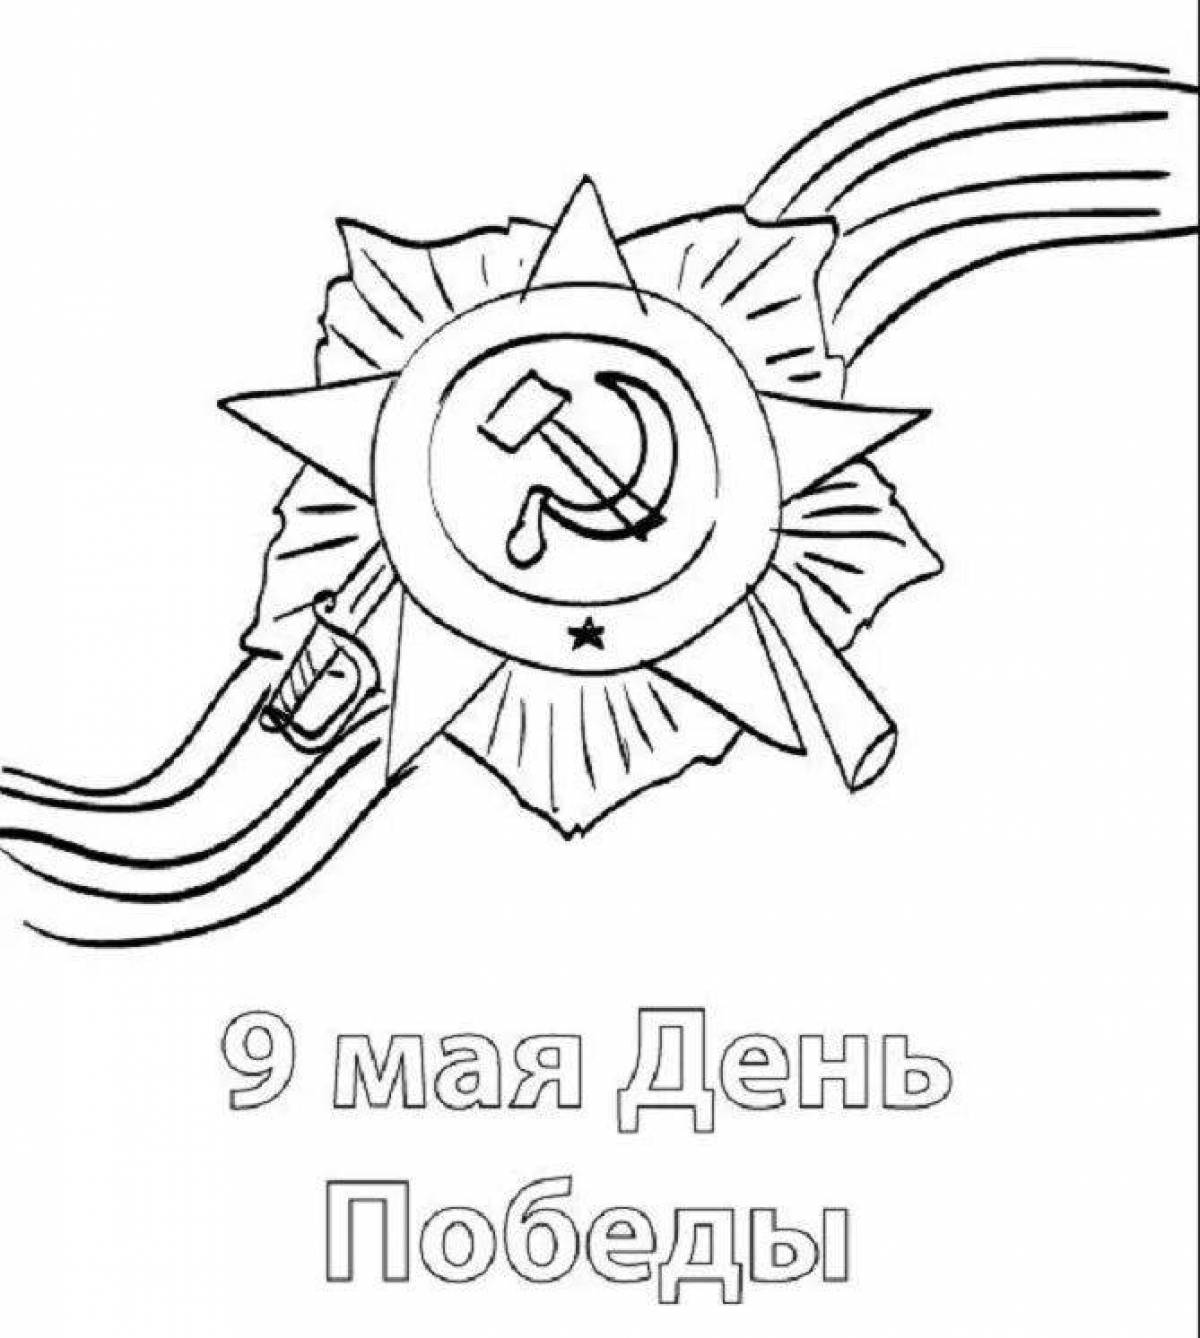 Colorful Leningrad victory ribbon coloring book